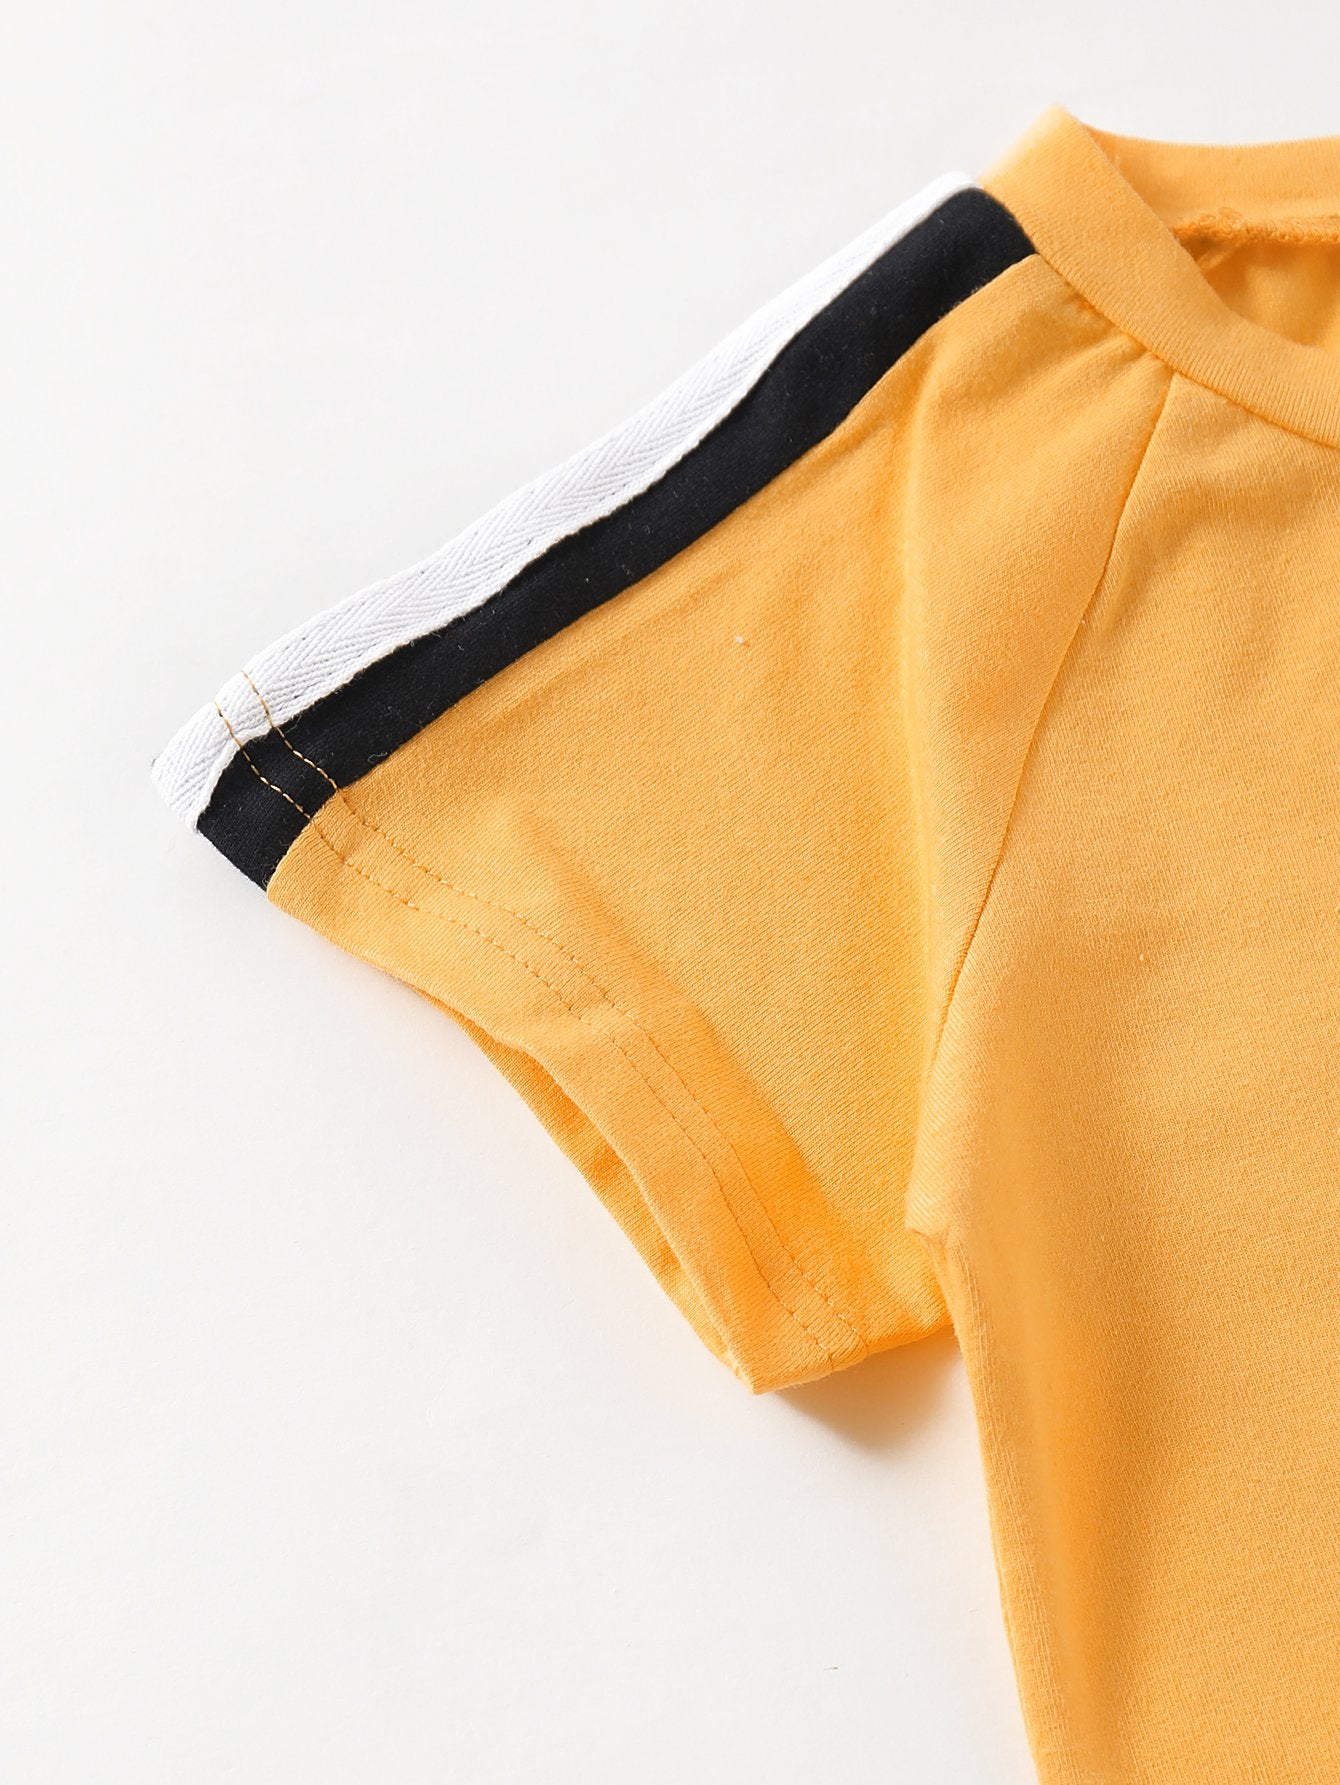 Boys Be Cool Dinosaur Printed Short Sleeve Top & Shorts Baby Boys Clothes Wholesale